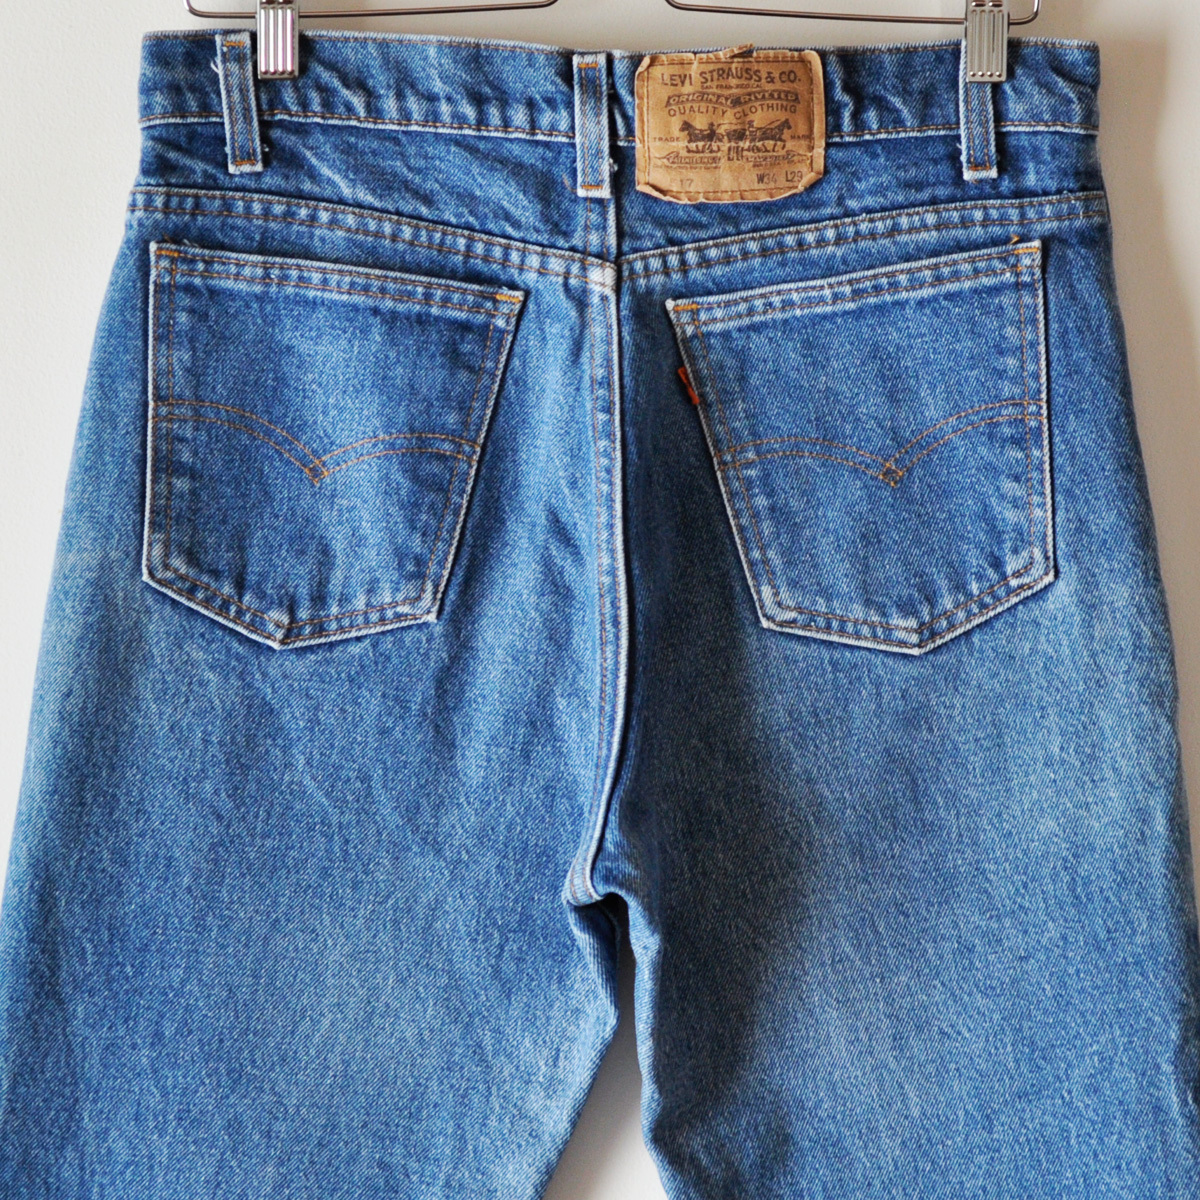 90s Levis 517 Levi's Denim boots cut pants jeans W34 W82cm USA made orange tab/ Vintage 00s 70shipi- flair 